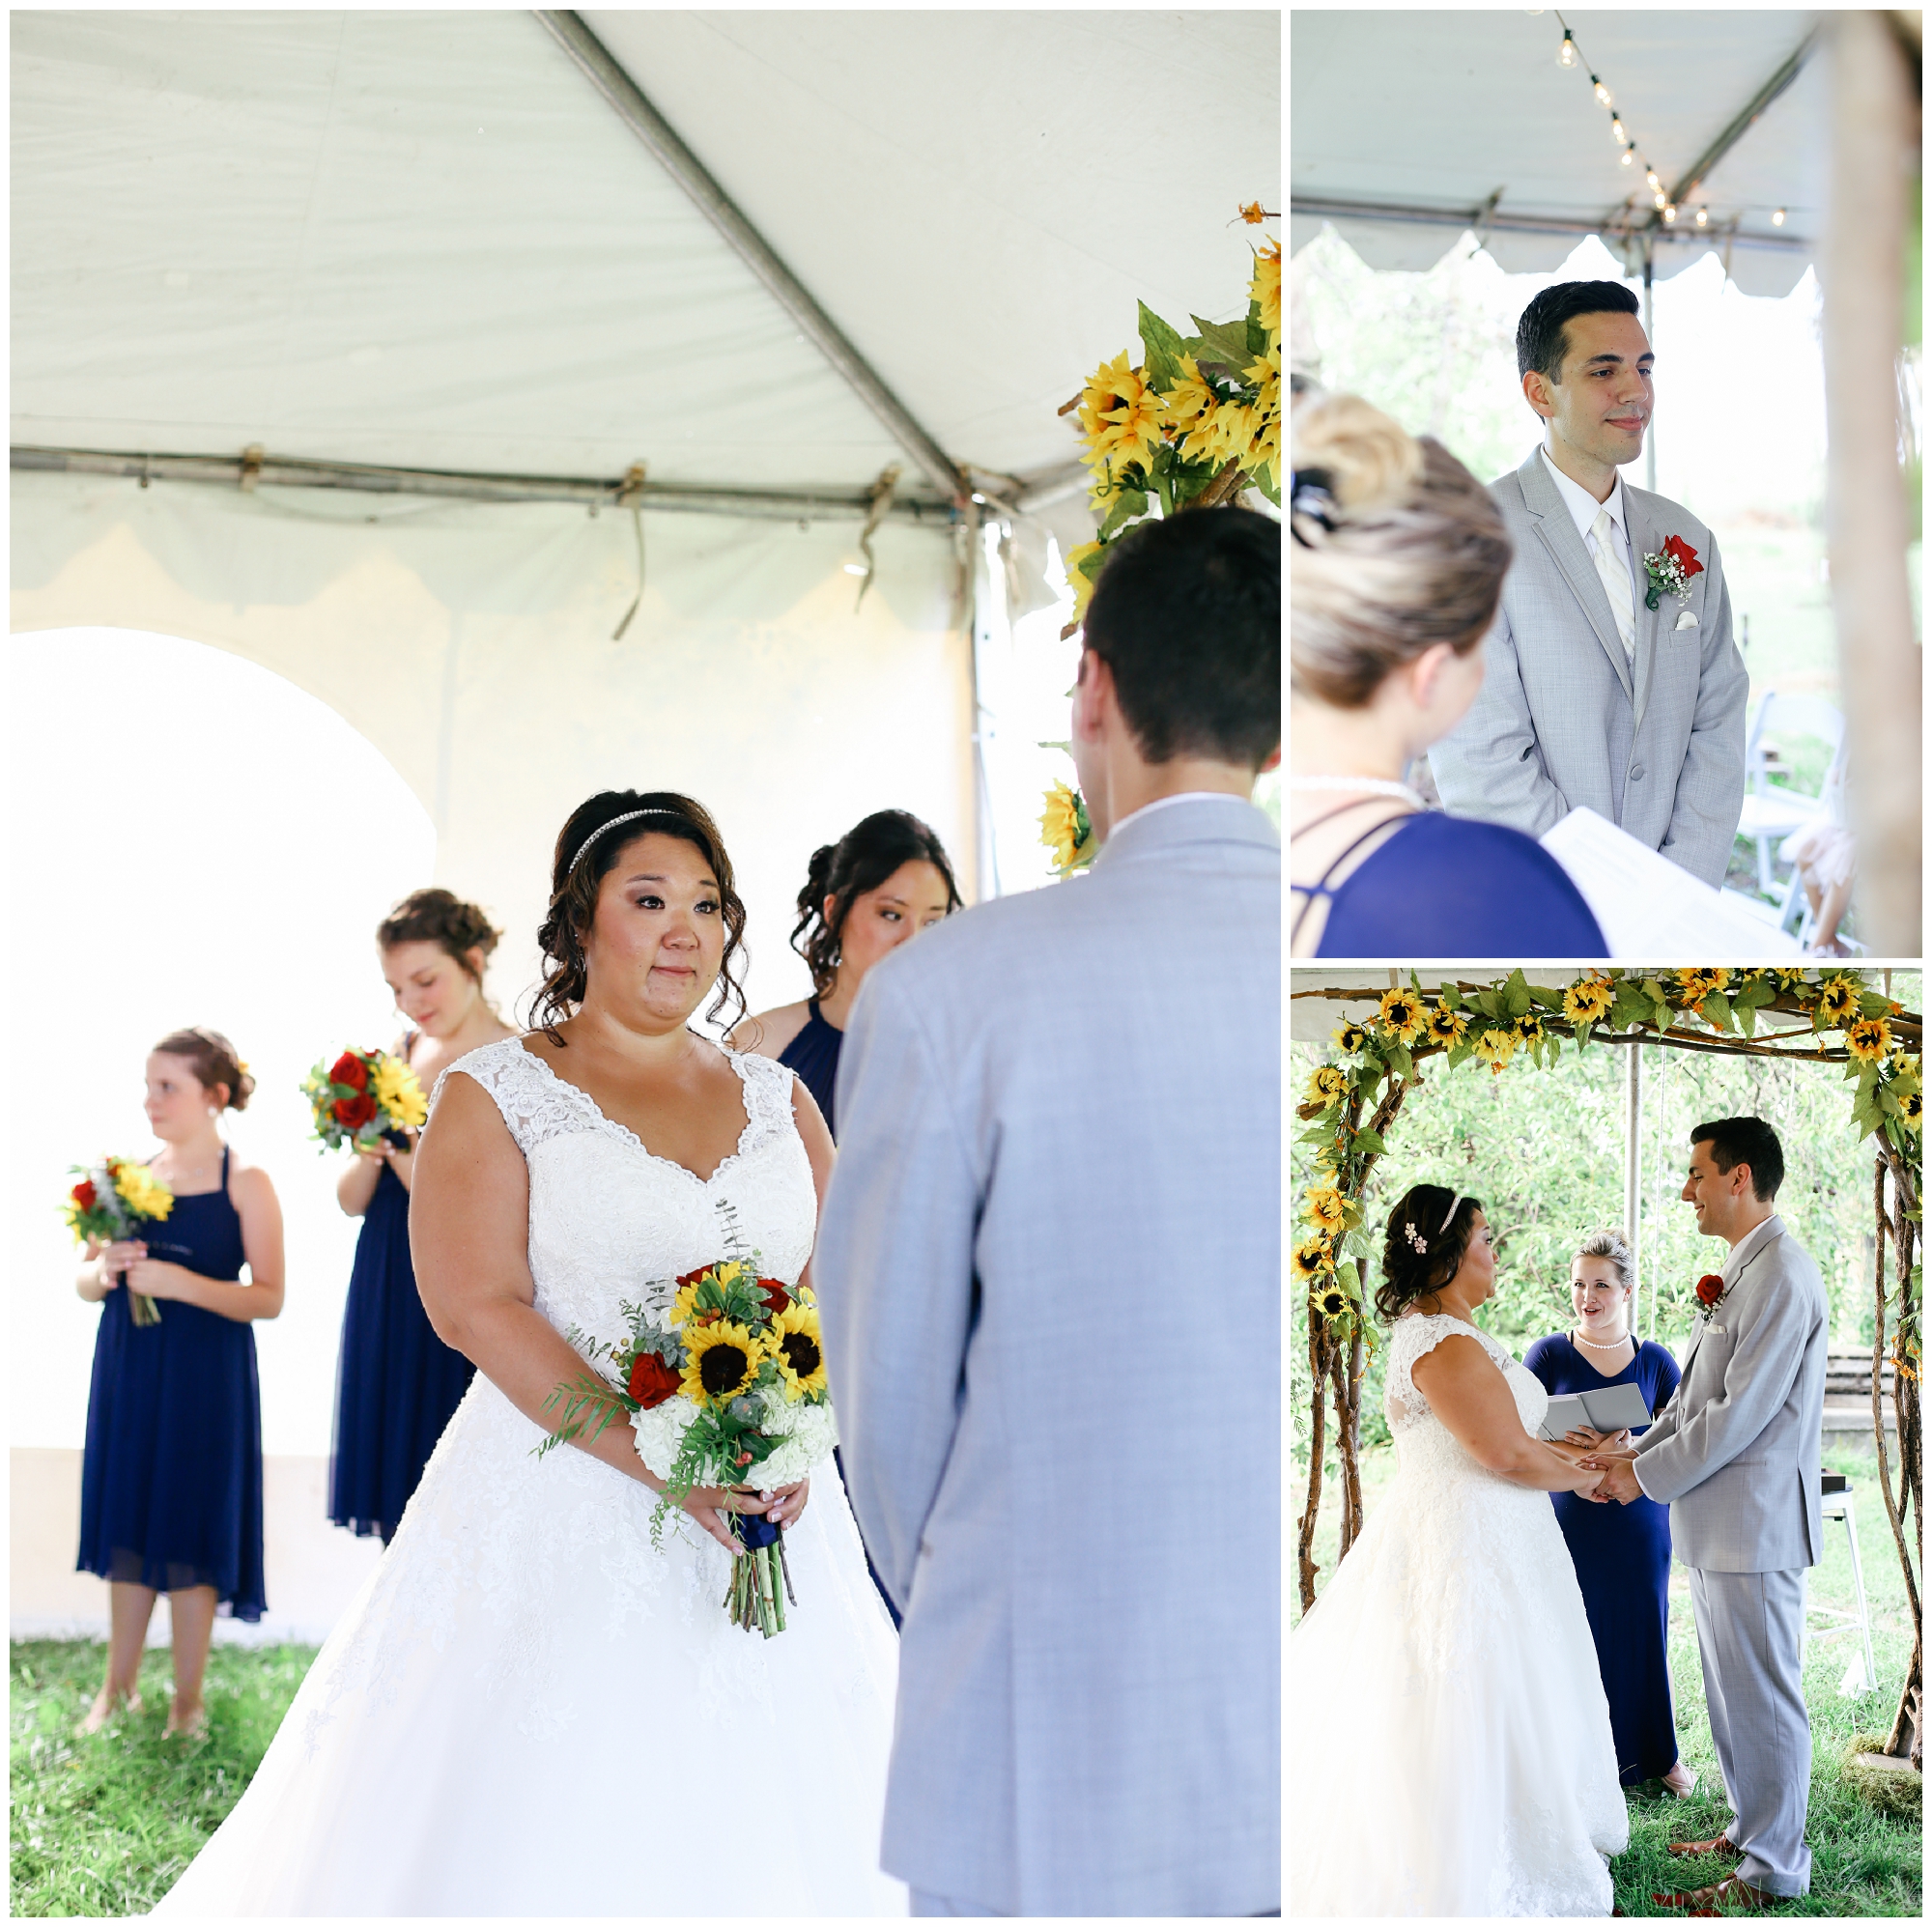 Kansas City Bride & Groom Wedding Photographer